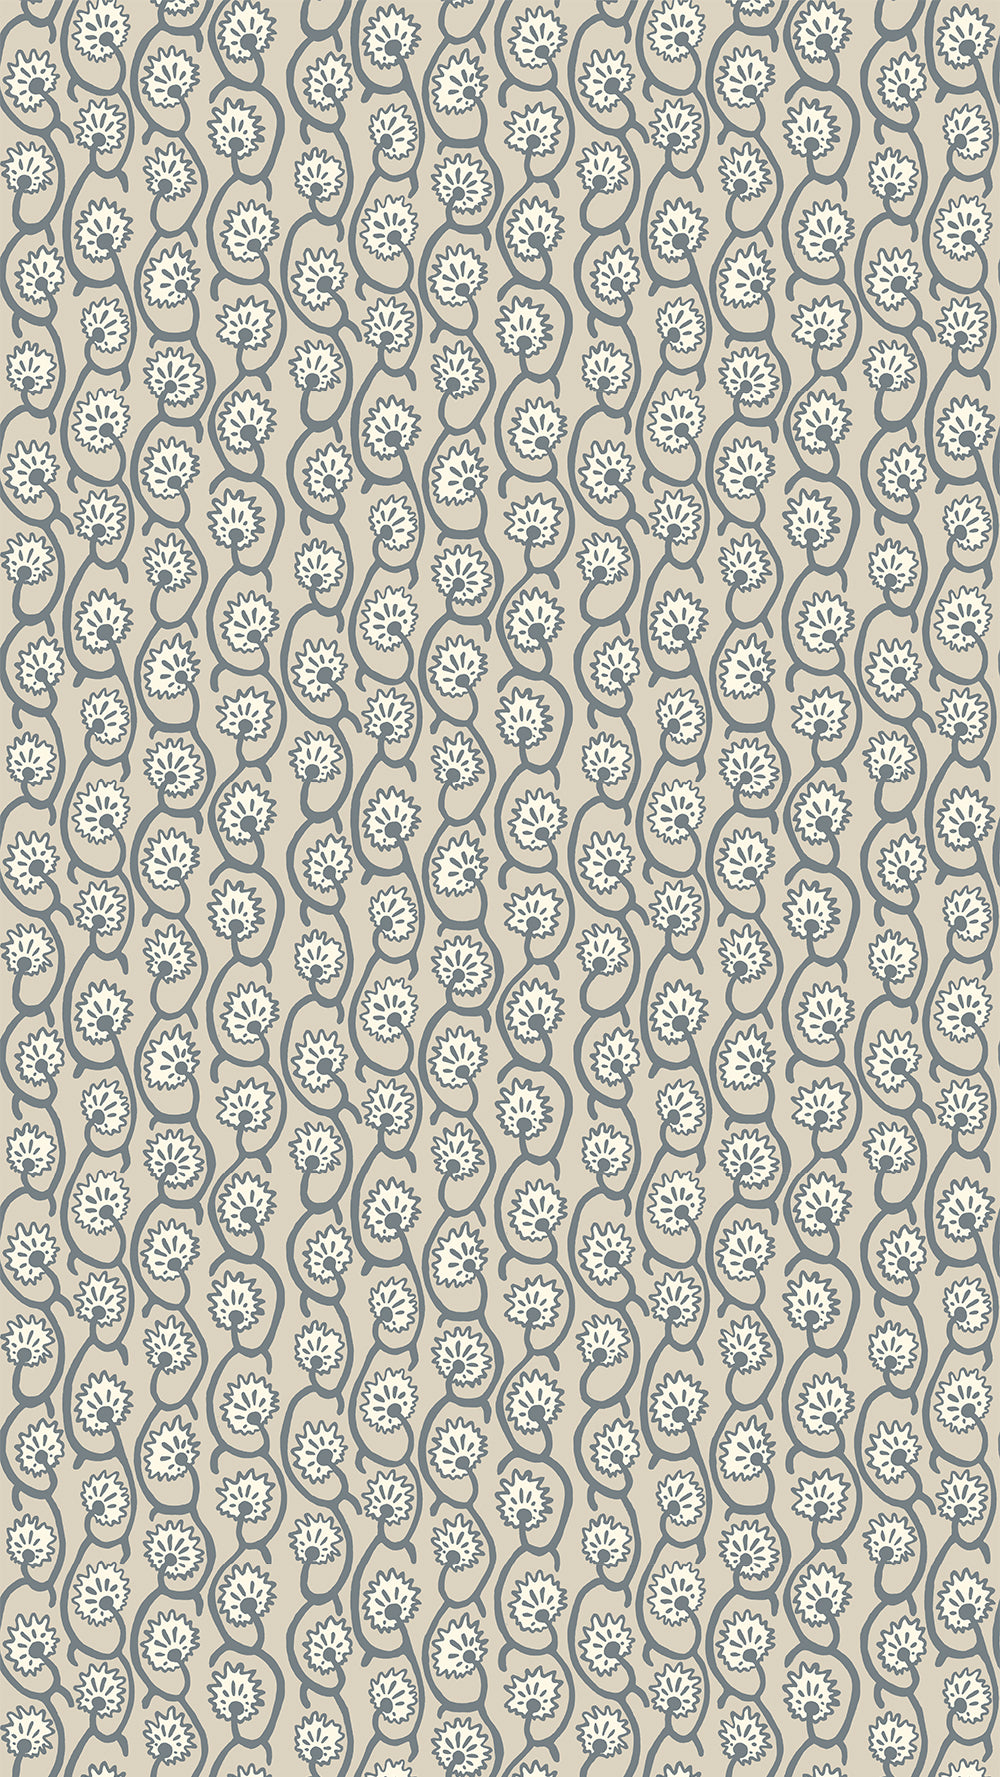 GER-024-017-014-josephine-munsey-geranium-stripe-blue-white-sand-organic-stripes-botanical-retro-wallpaper-pattern-leaves